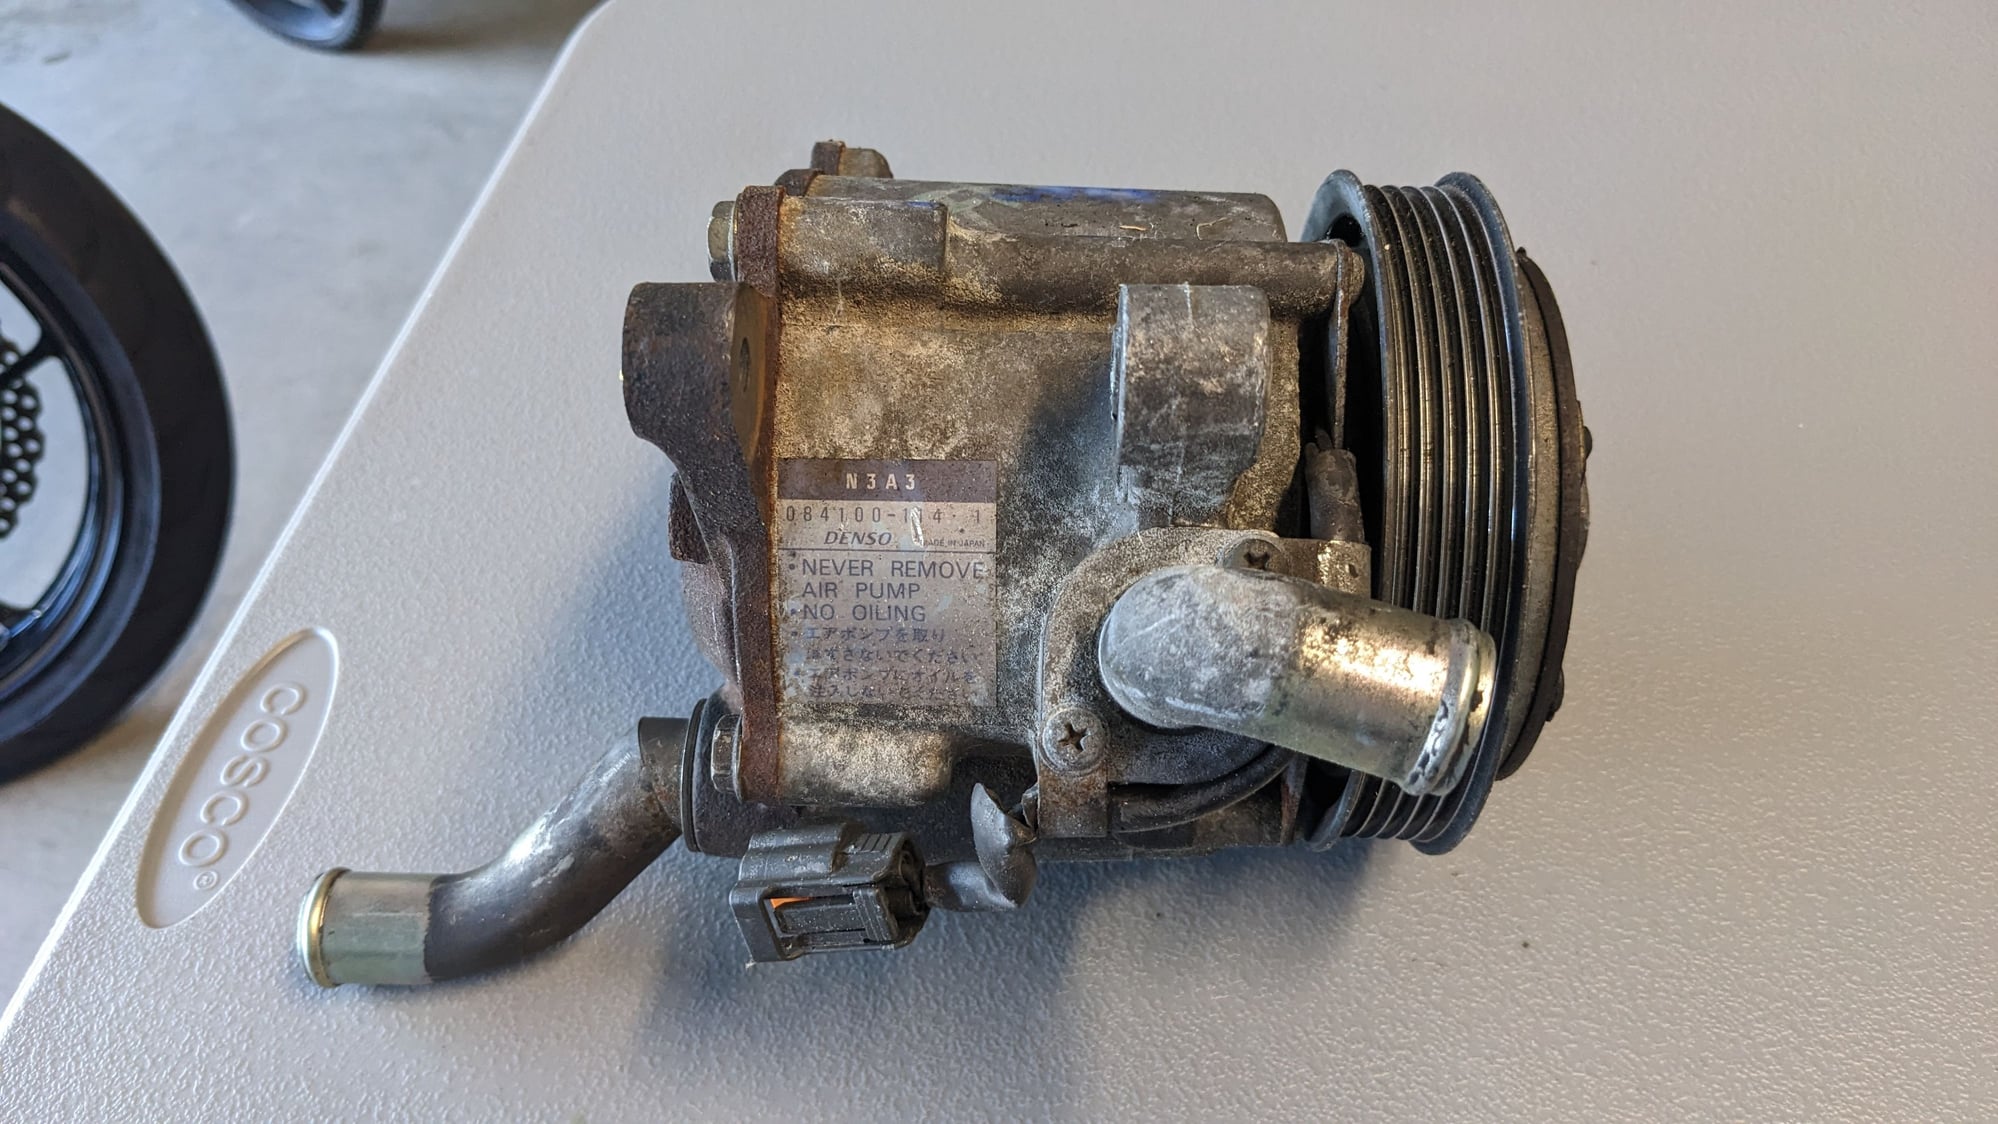 1995 Mazda RX-7 - Air pump - Engine - Intake/Fuel - $50 - Oceanside, CA 92057, United States